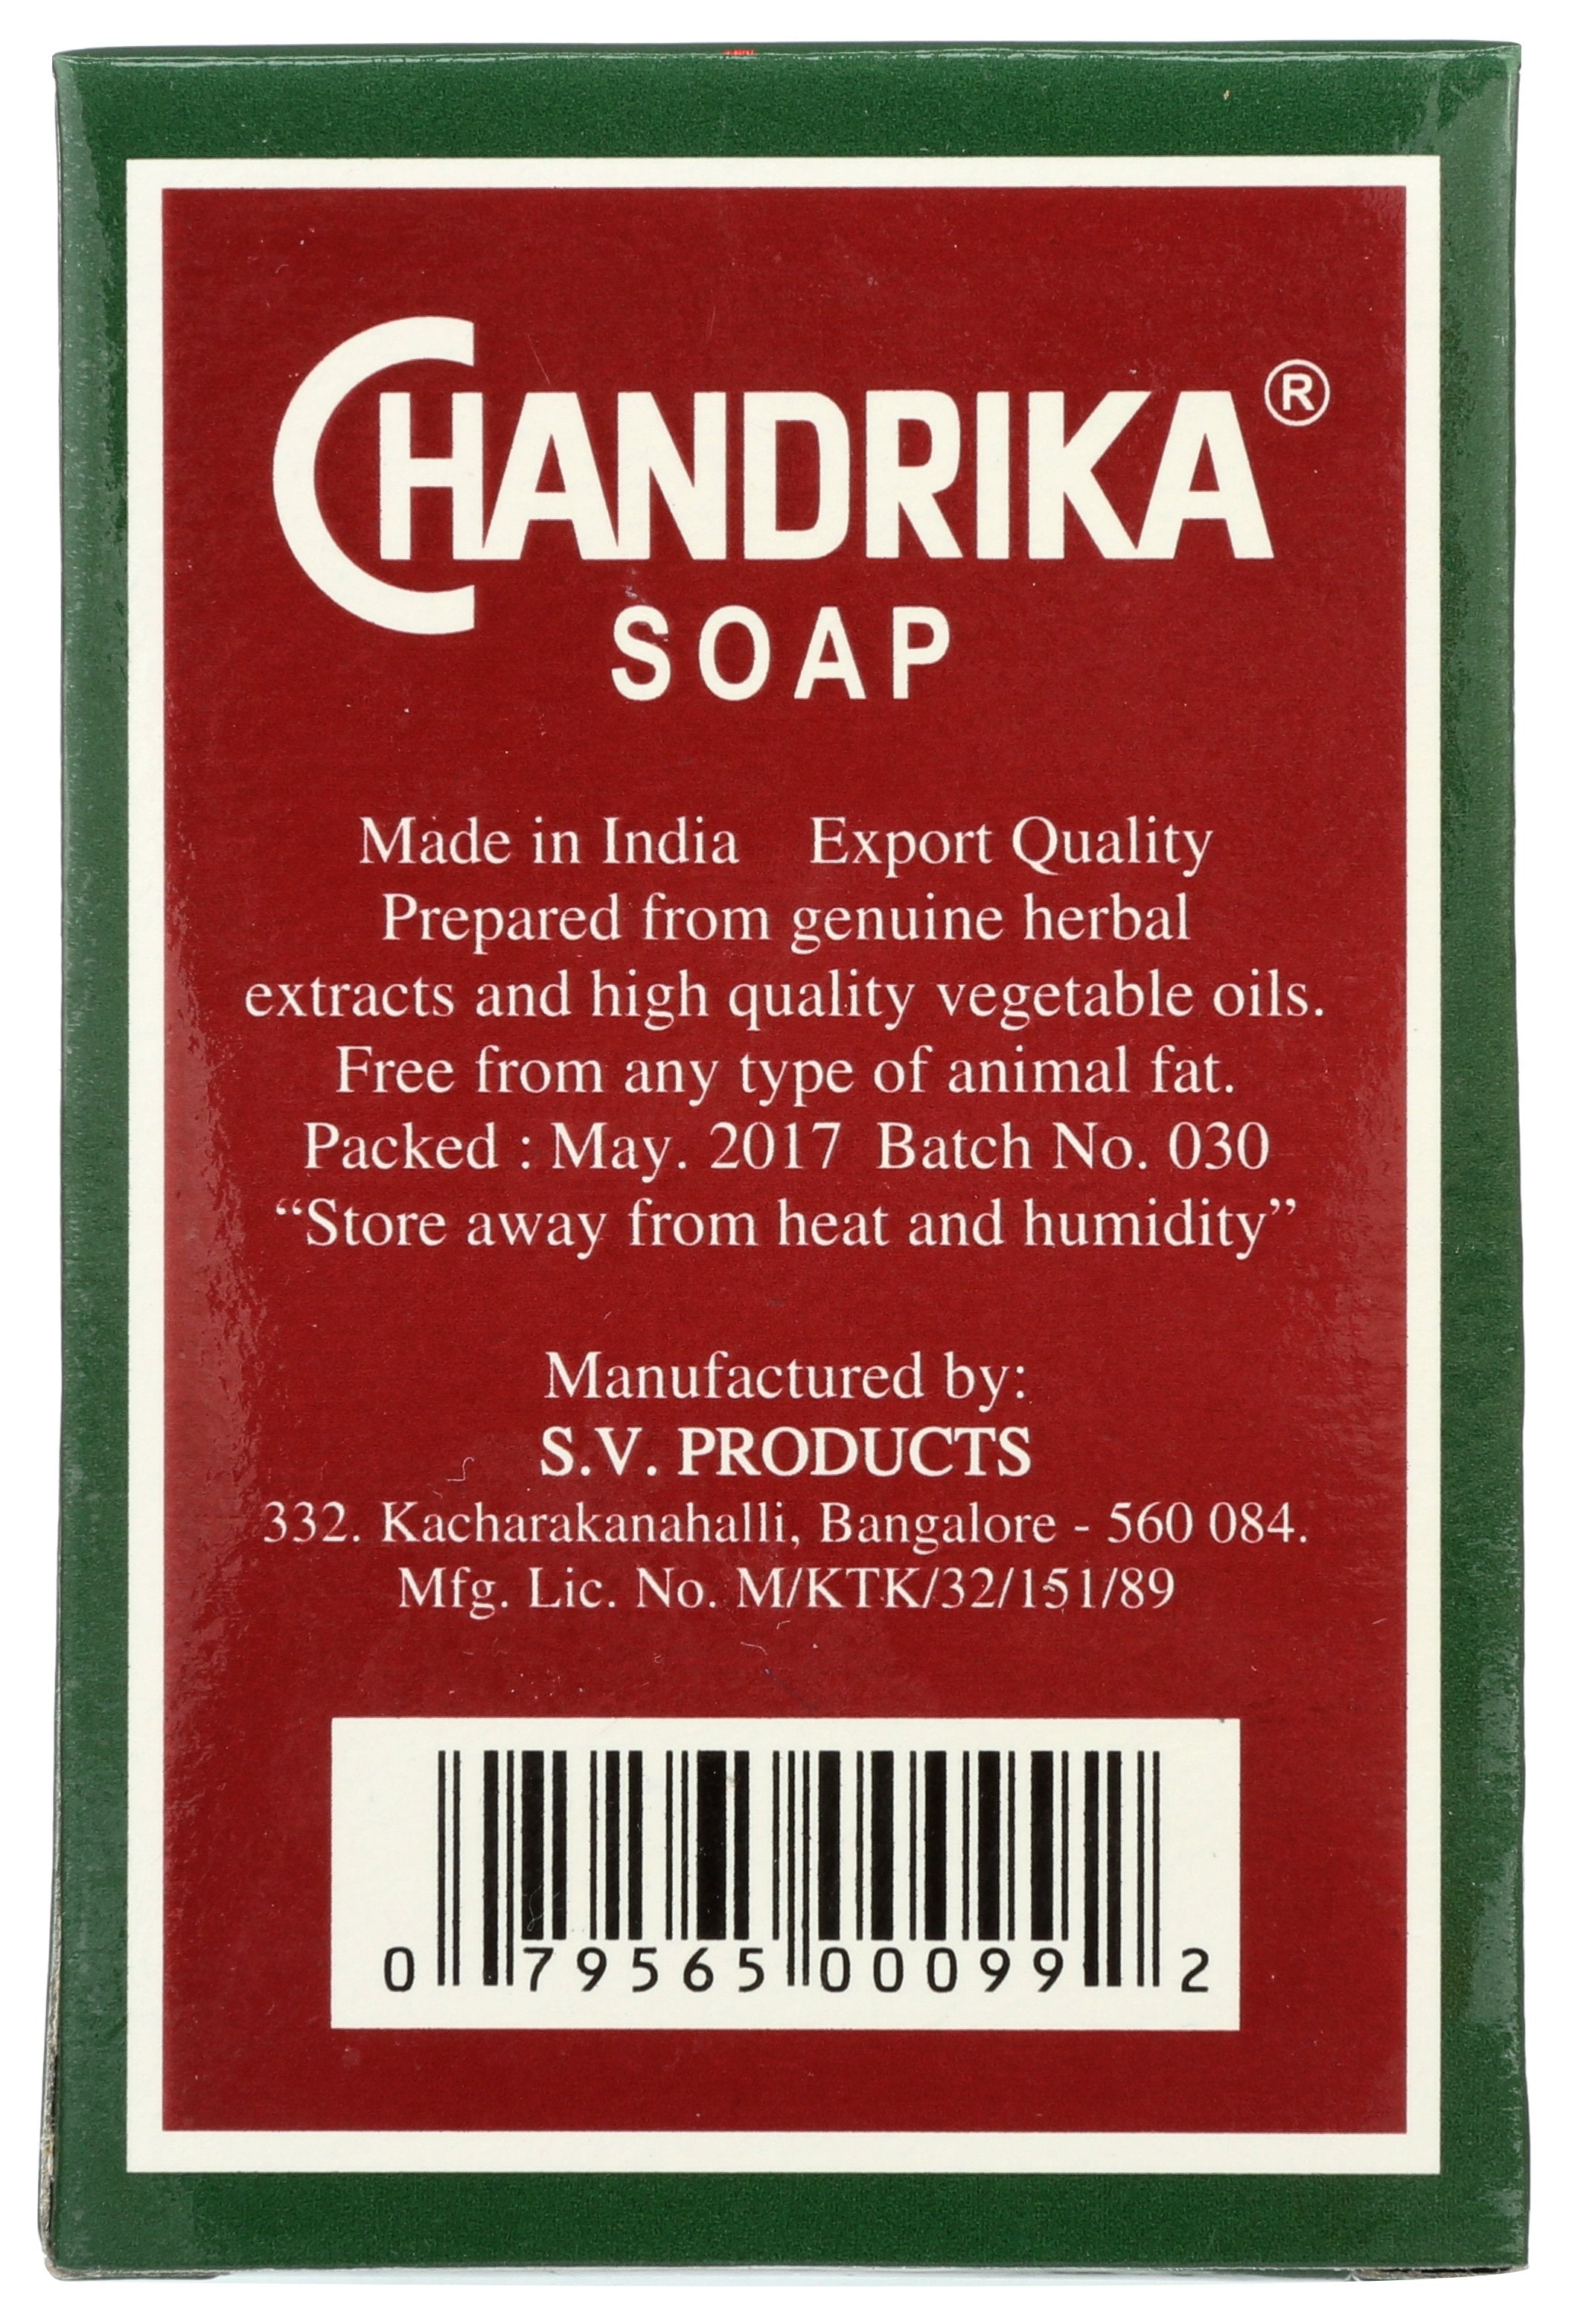 CHANDRIKA SOAP BAR AYURVEDIC - Case of 4